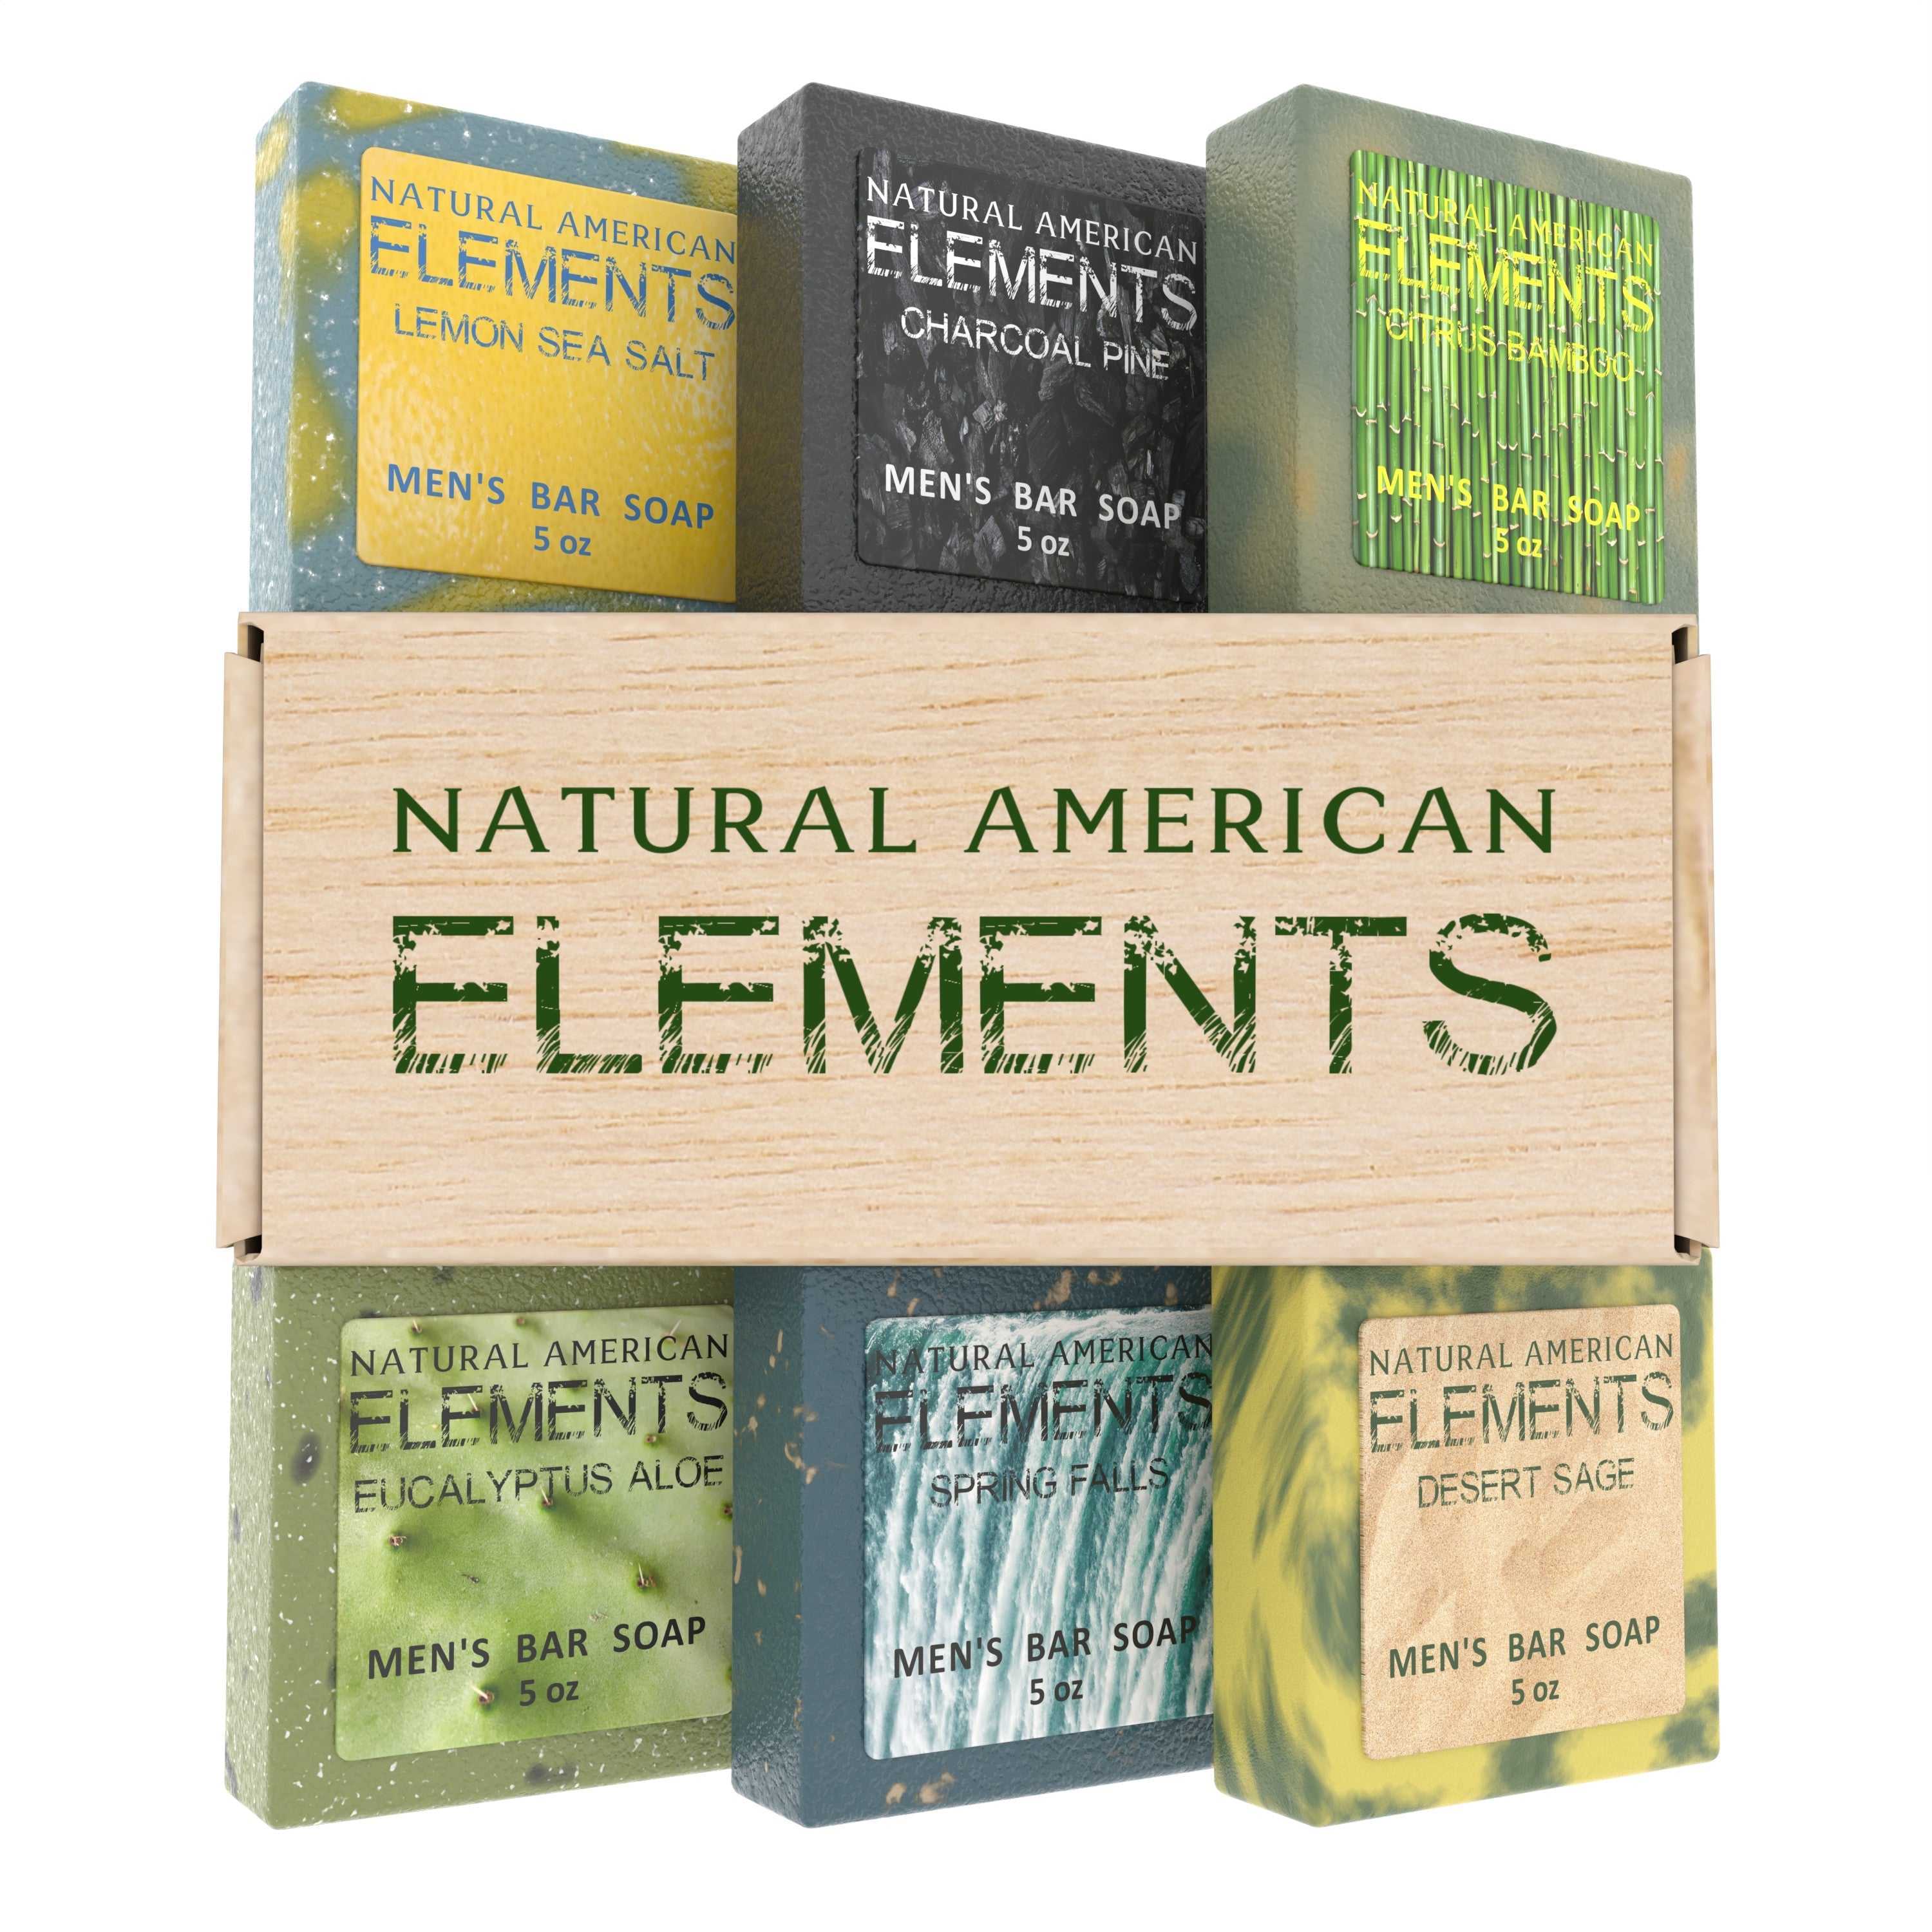 Natural-Elements-US